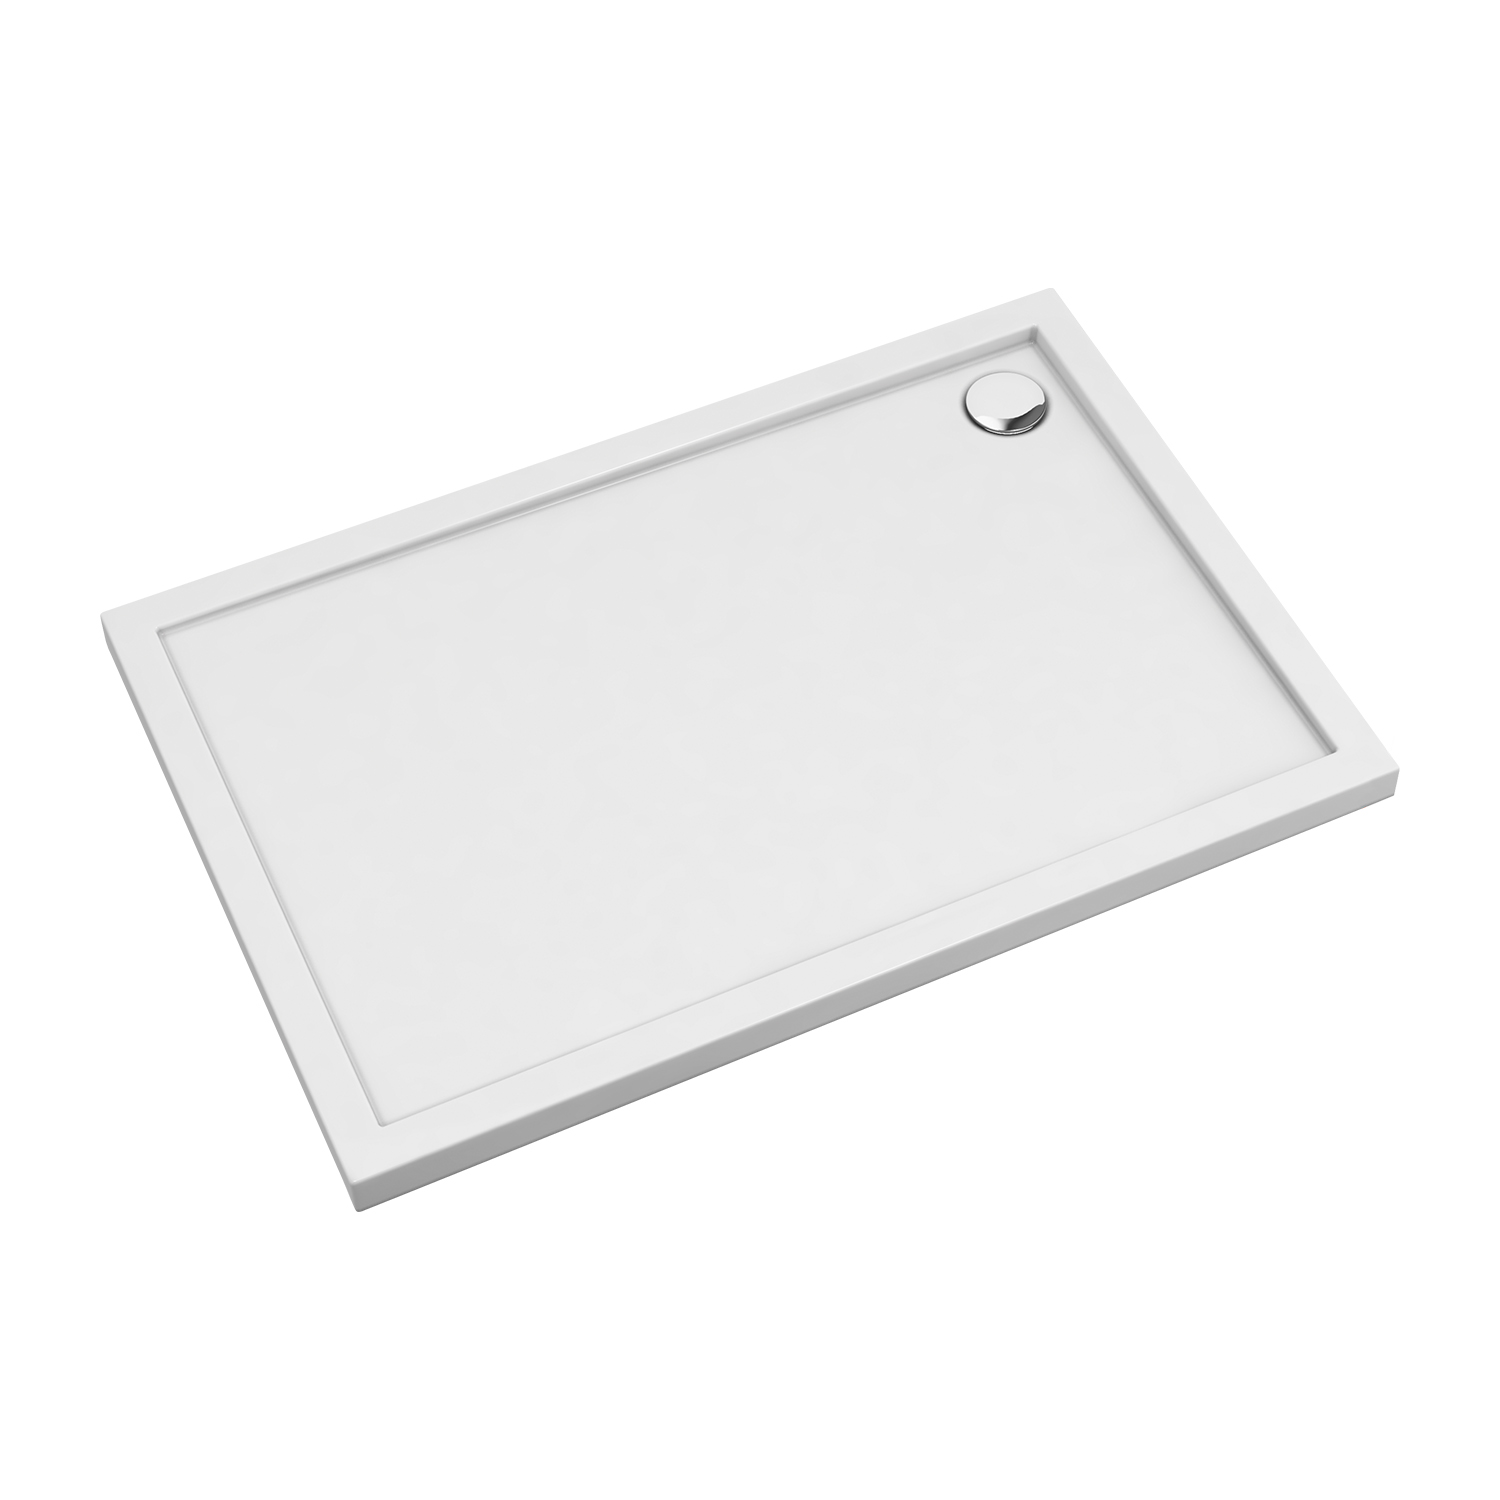 acrylic shower tray, 80 x 100 cm